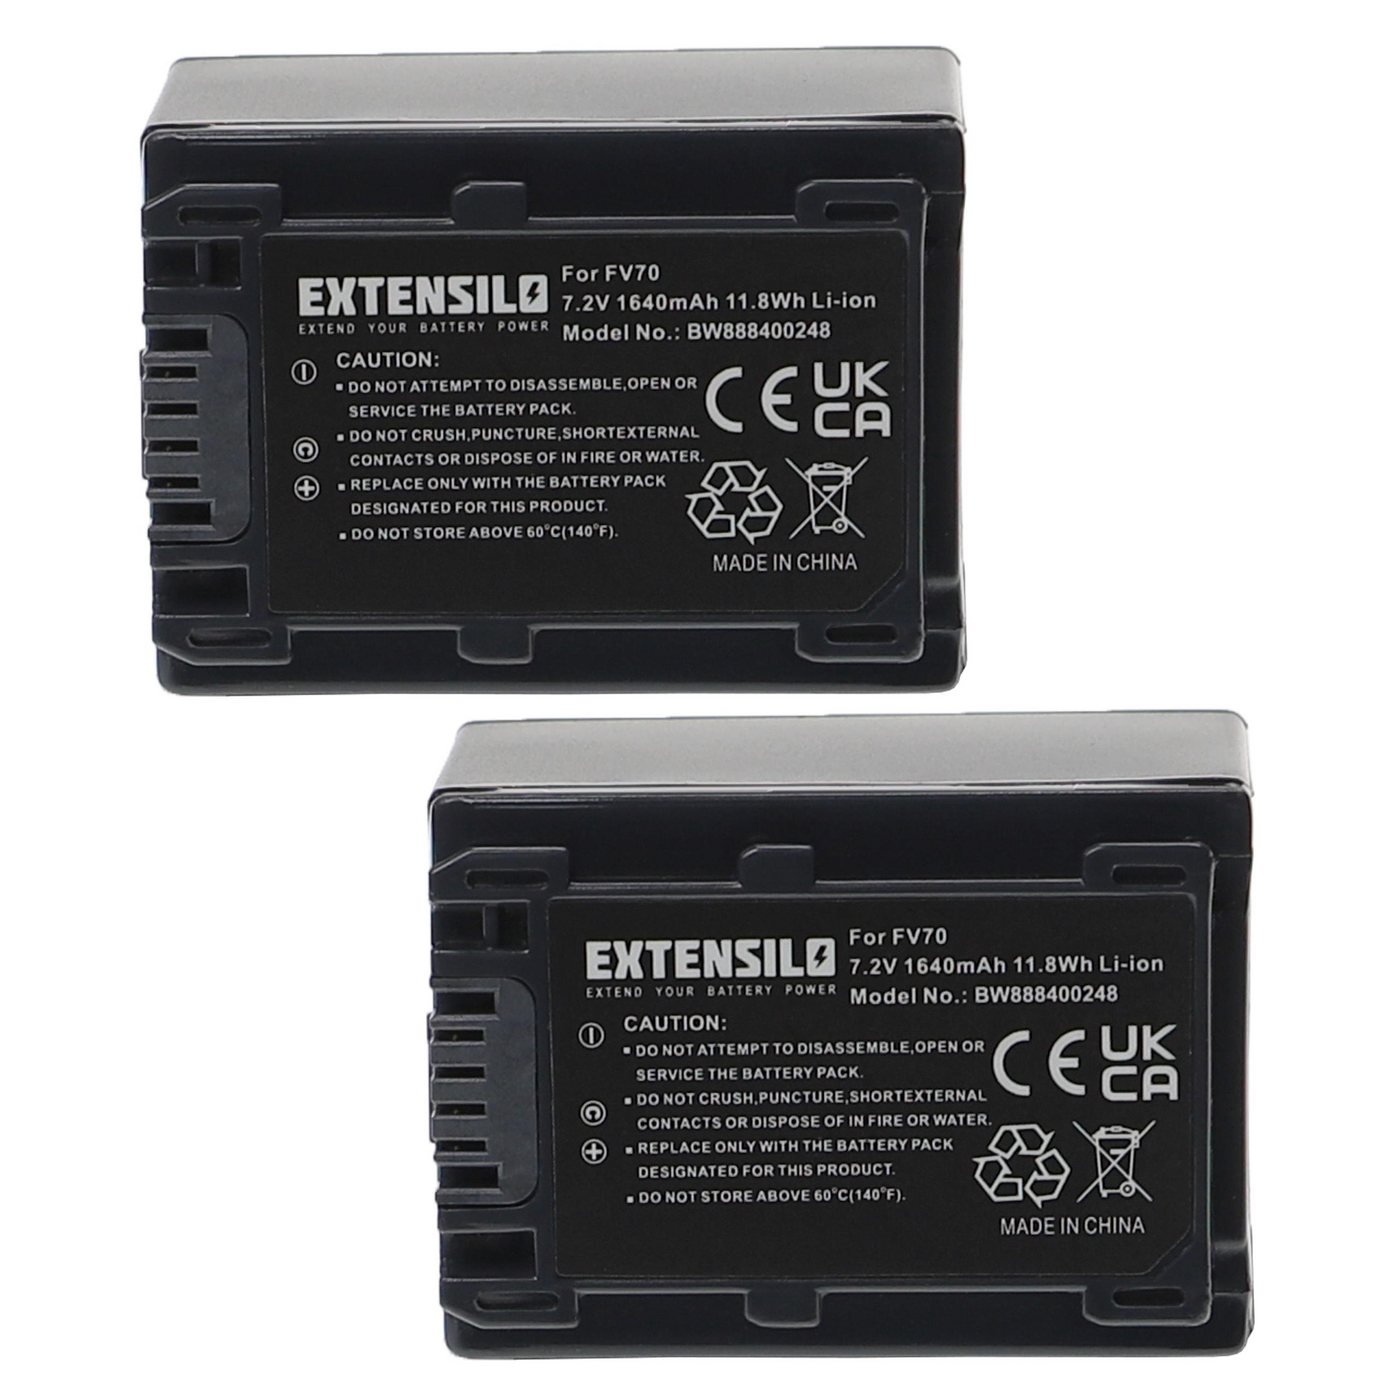 Extensilo passend für Sony HDR-CX180EL, HDR-CX180ER, HDR-CX180ES, HDR-CX190E, HDR-CX200E, HDR-CX210E Kamera / Foto DSLR / Camcorder Analog / Camcorder Digital (1640mAh, 7,2V, Li-Ion) Kamera-Akku 1640 mAh von Extensilo